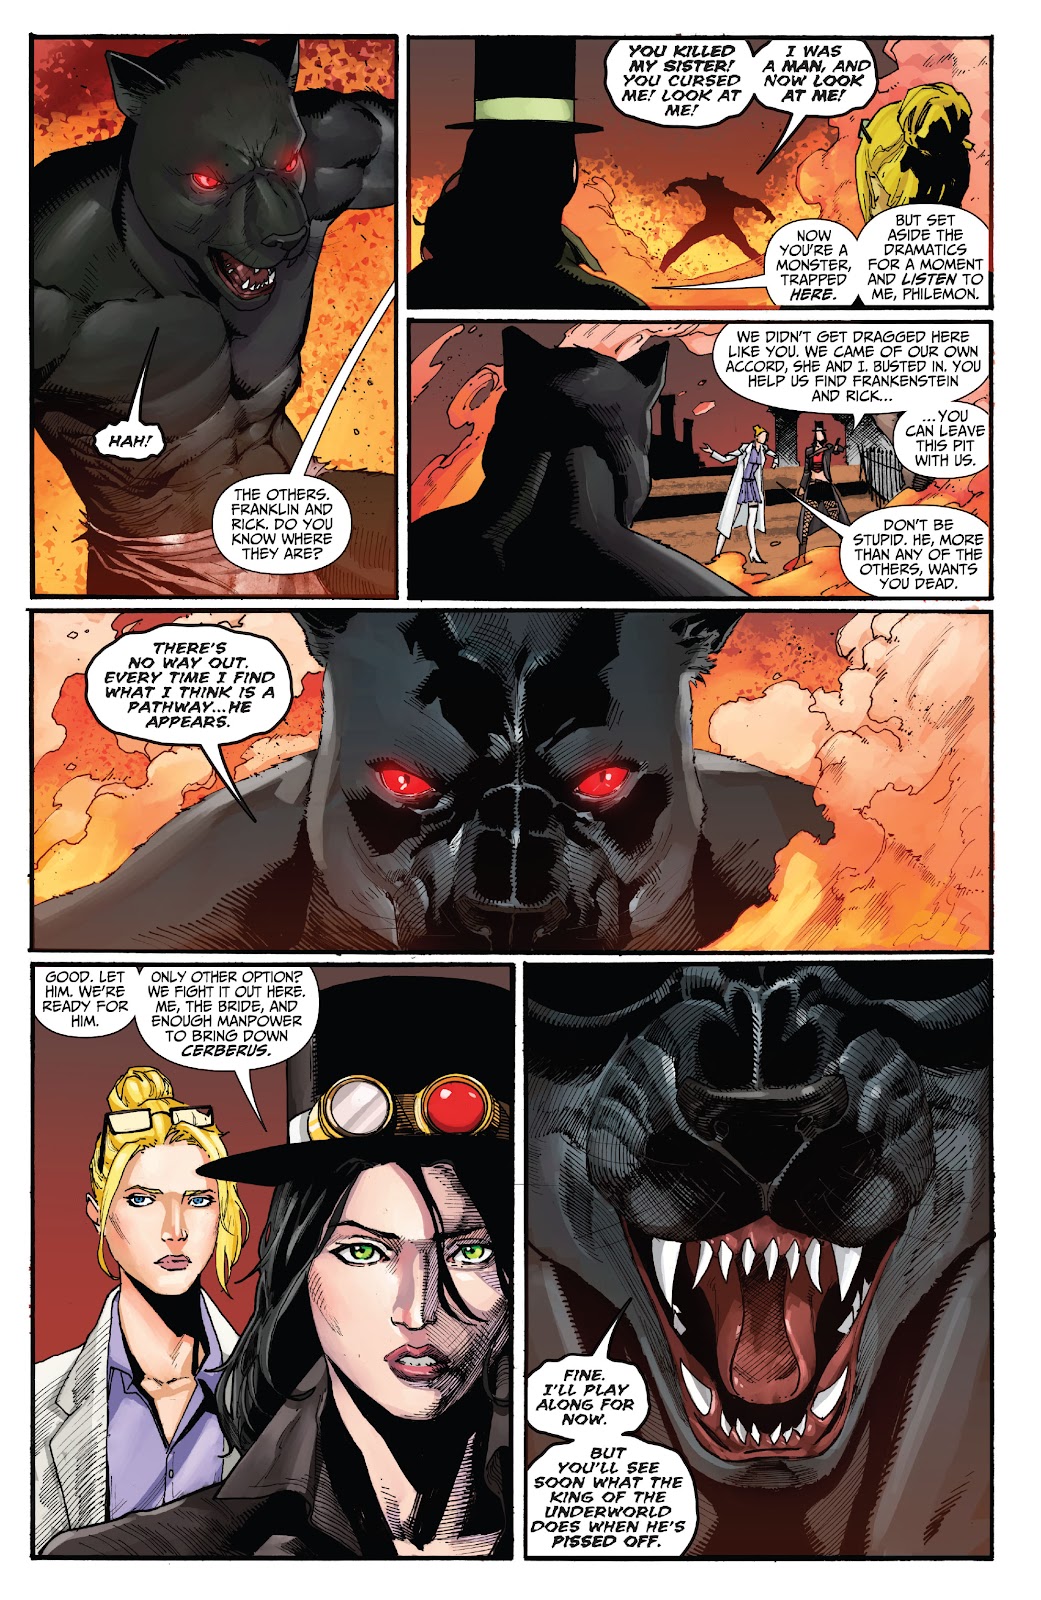 Van Helsing: Return of the League of Monsters issue 2 - Page 14